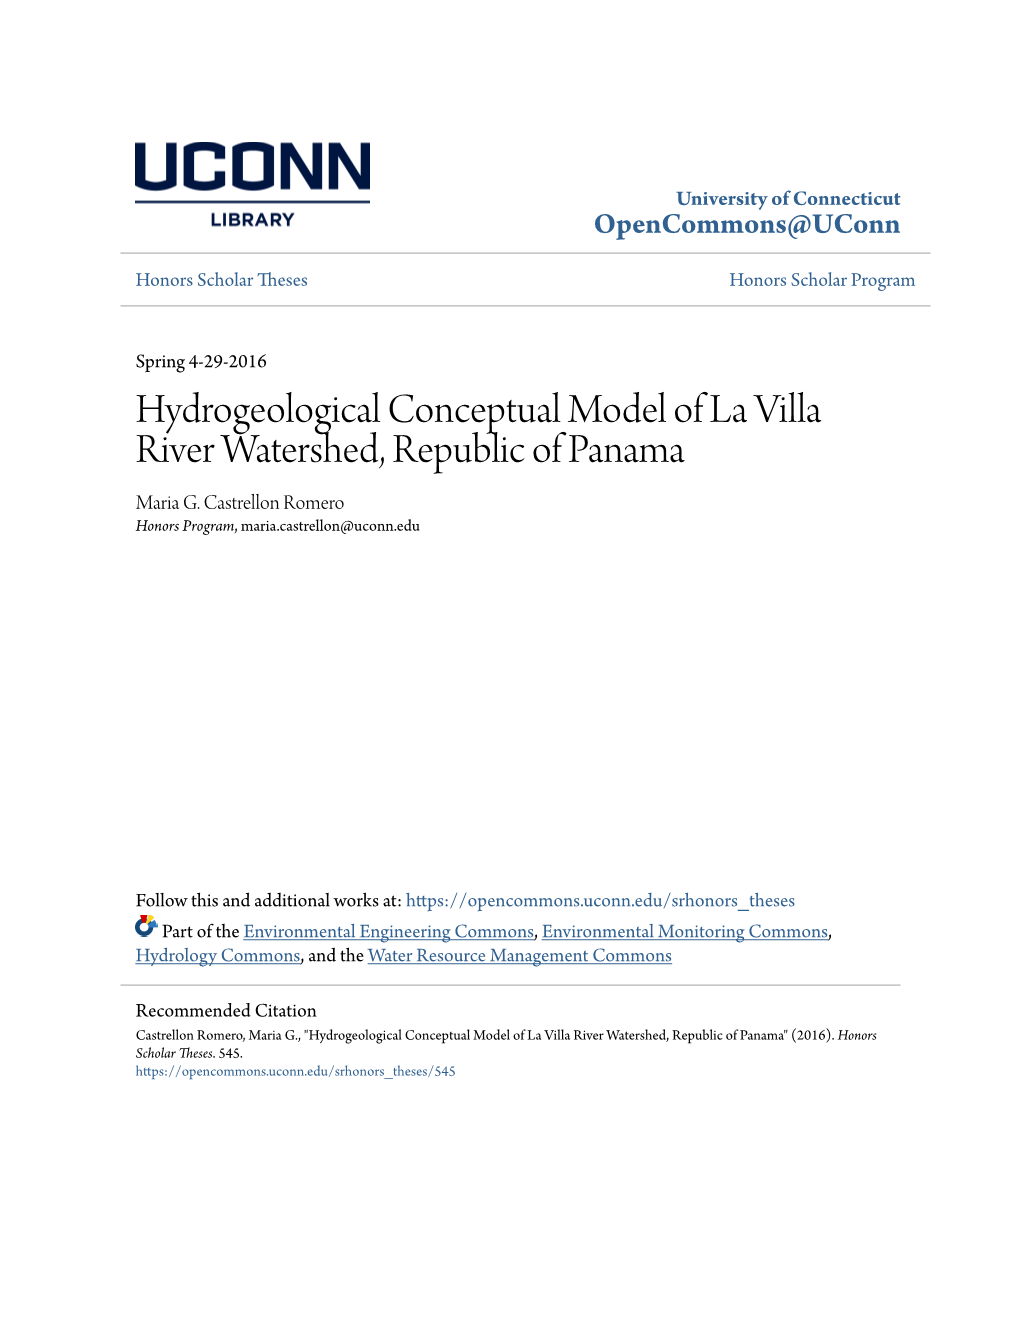 Hydrogeological Conceptual Model of La Villa River Watershed, Republic of Panama Maria G